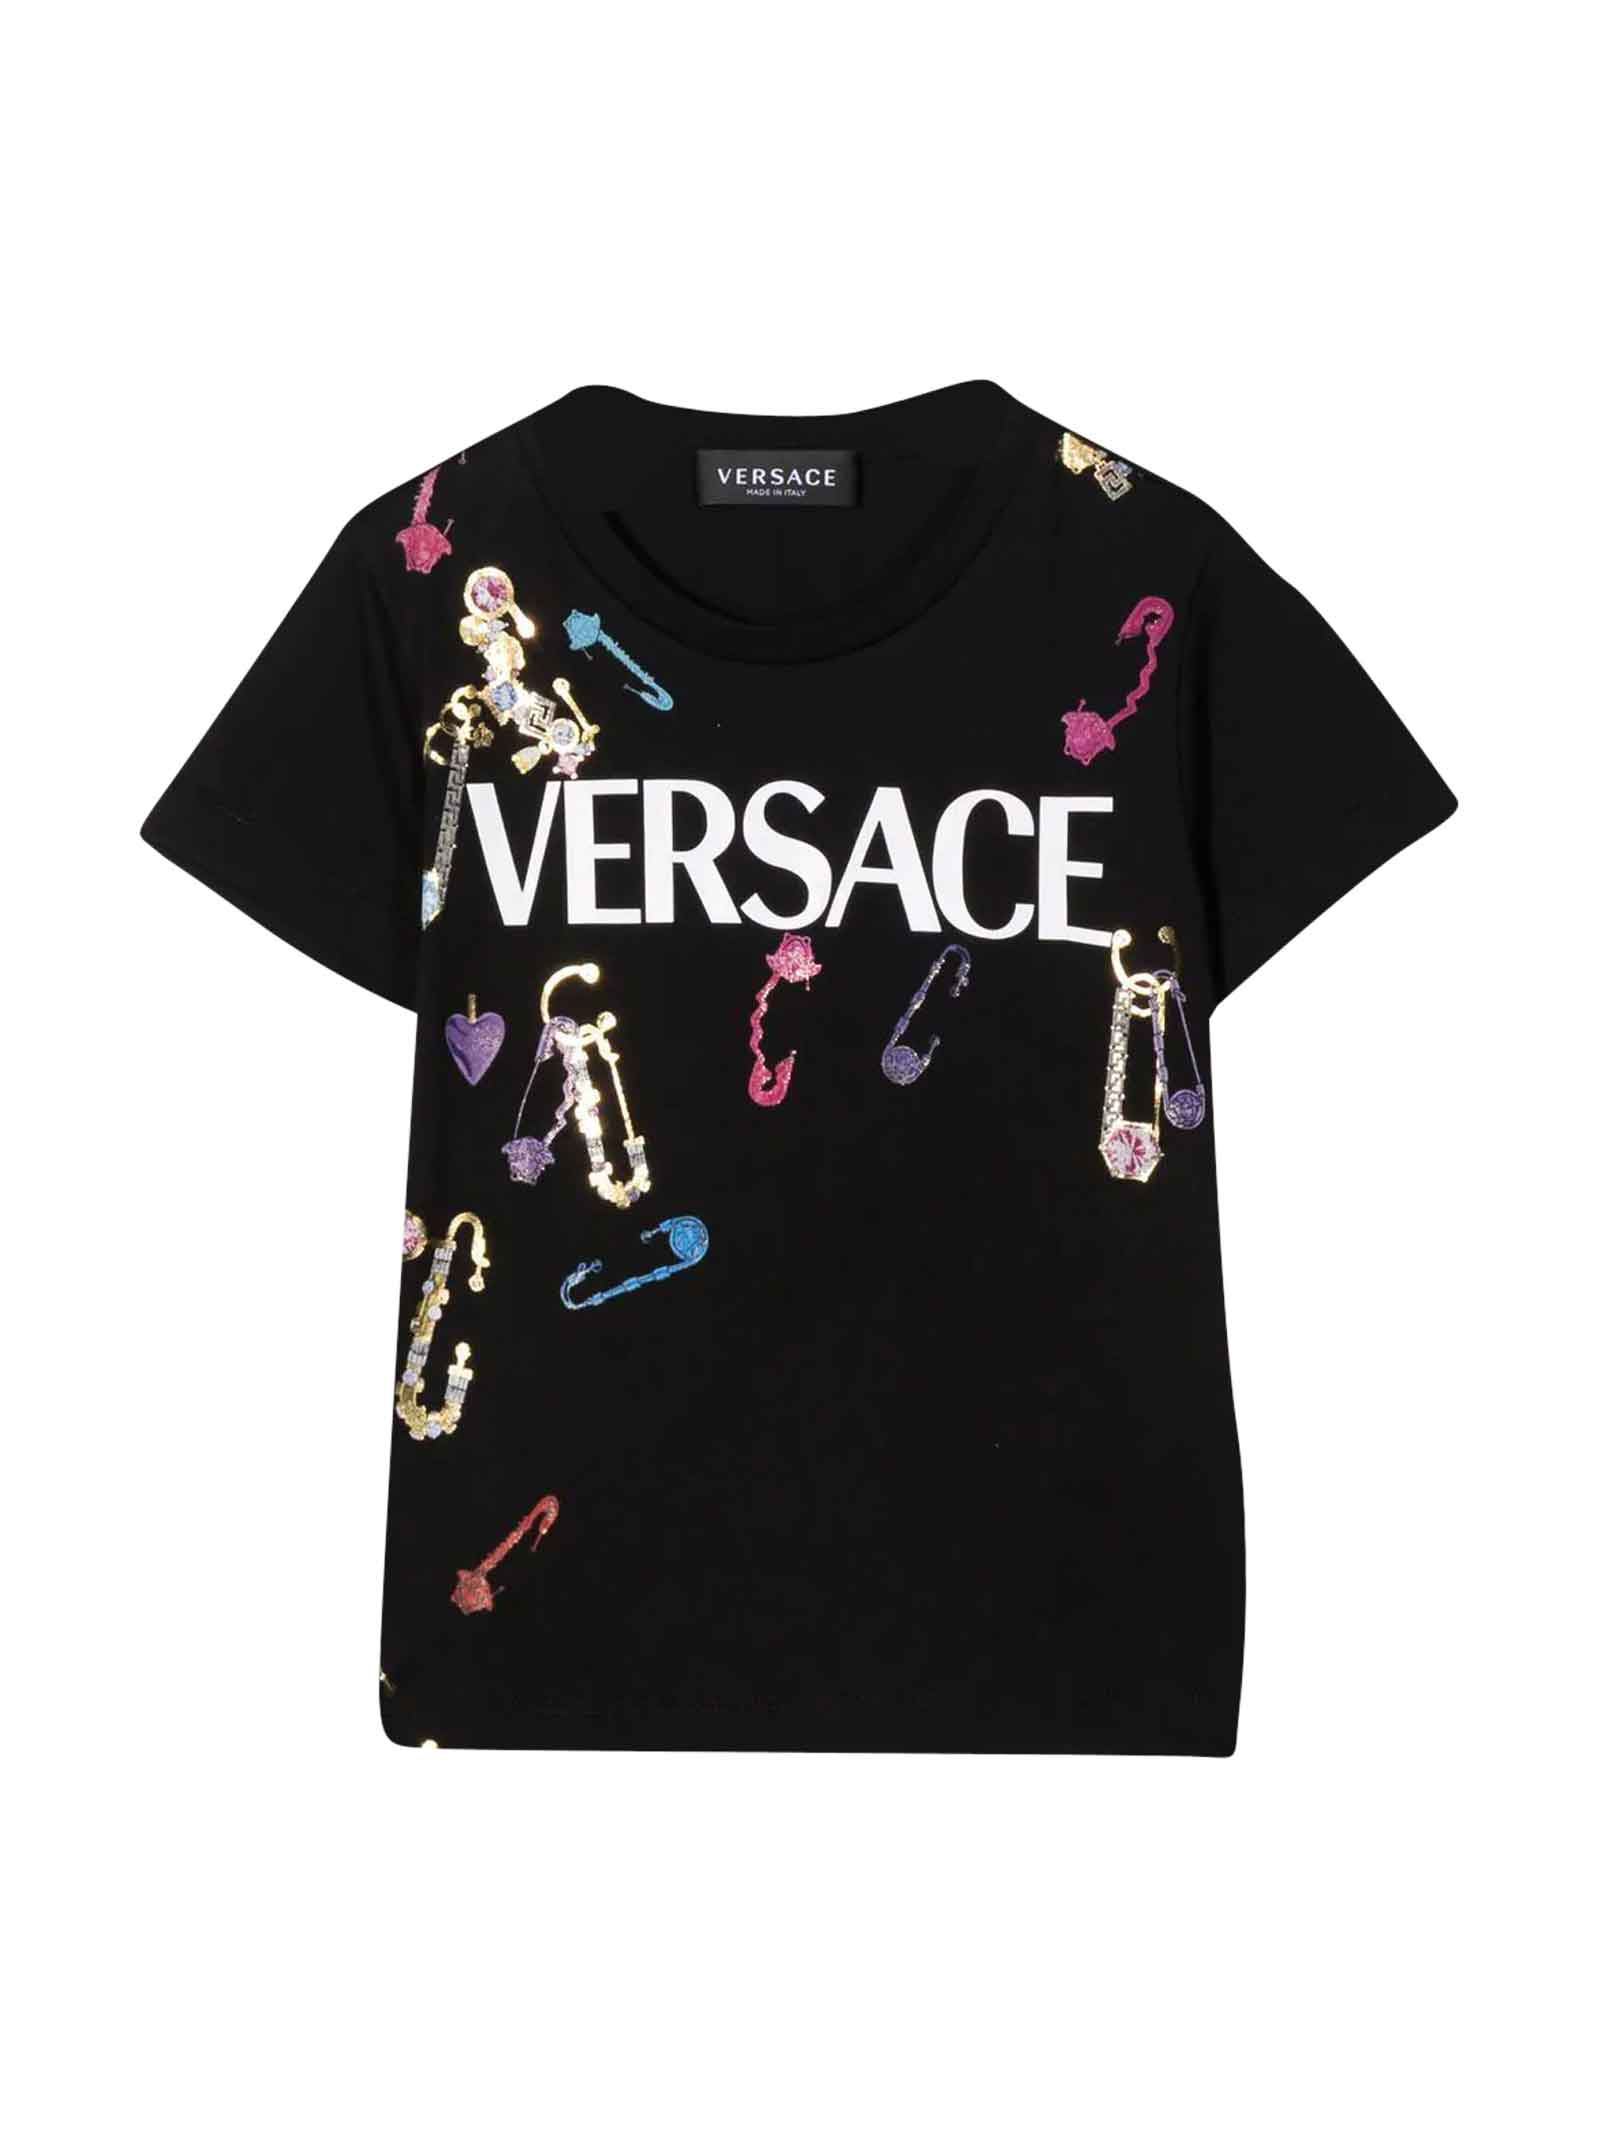 Versace Black T-shirt. unisex Kids.